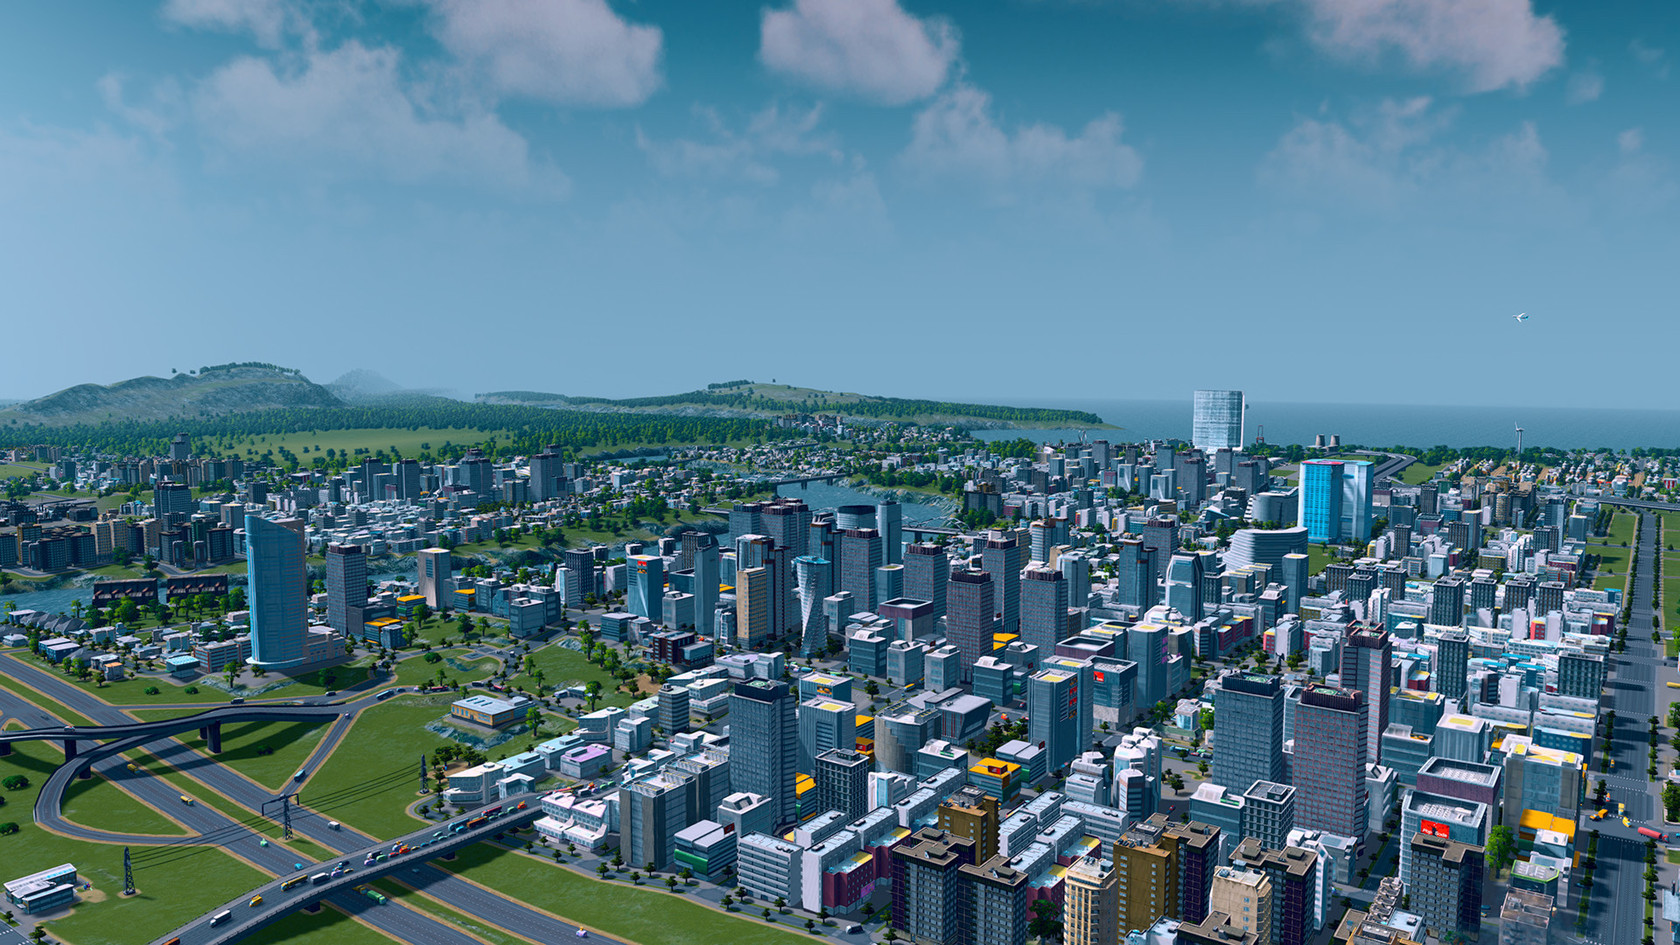 Cities Skylines  STEAM - PC - Jogo Digital